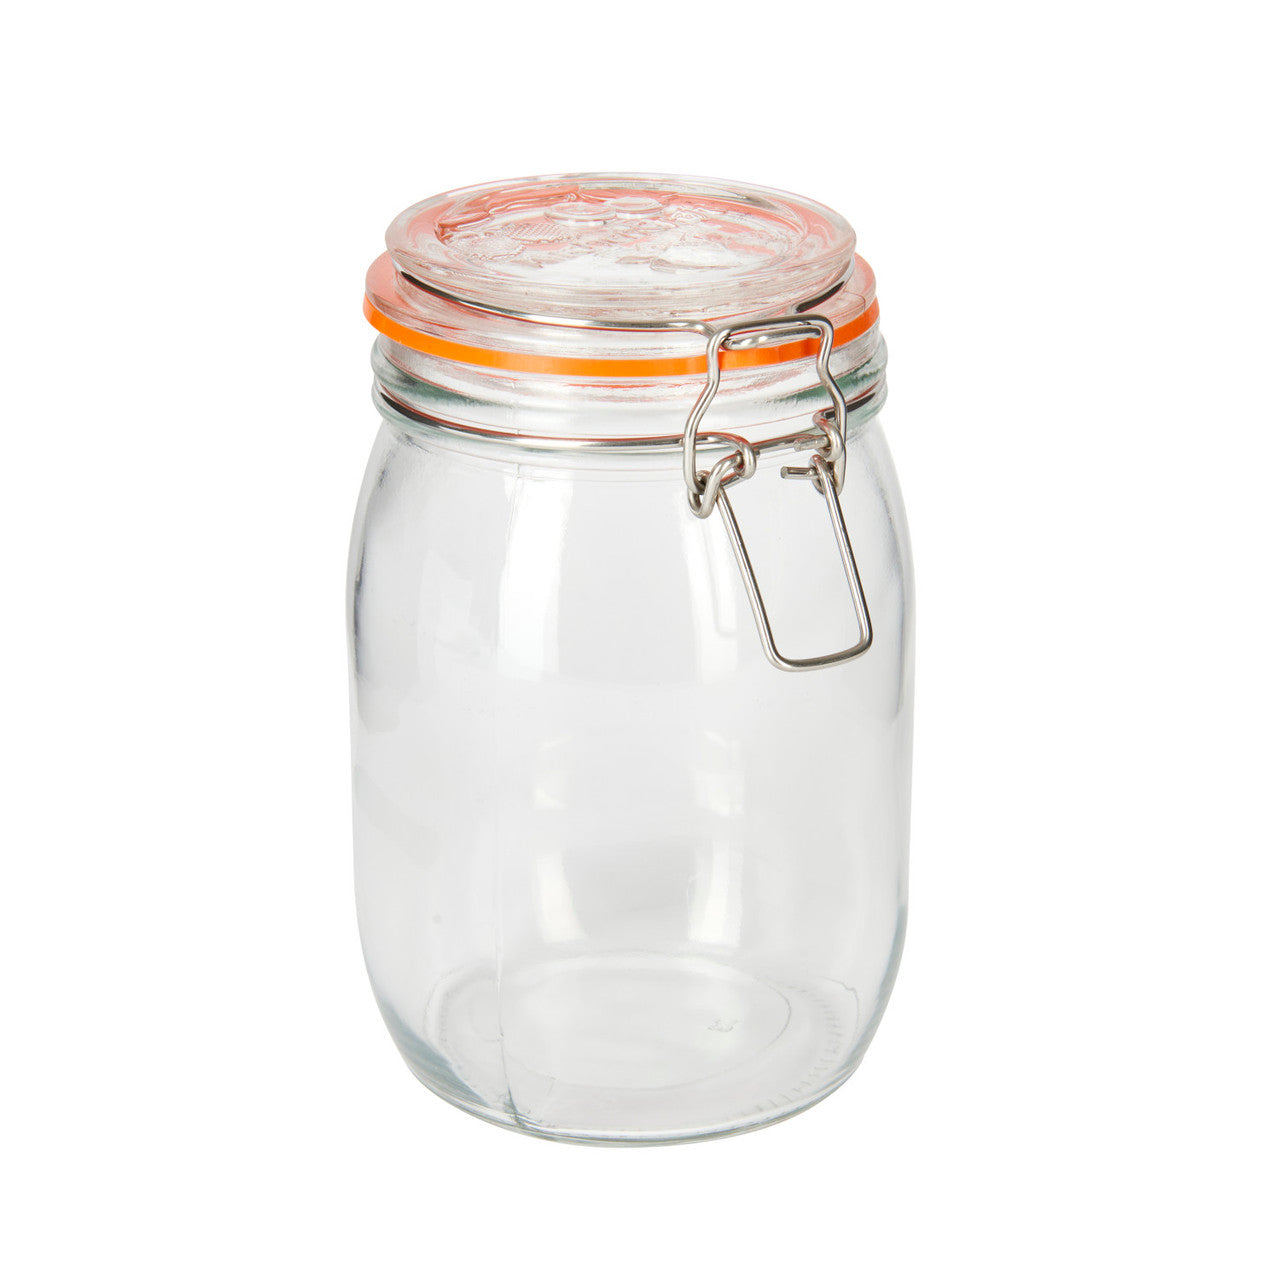 Kilner Glass Storage Jam Jar - 1 Ltr